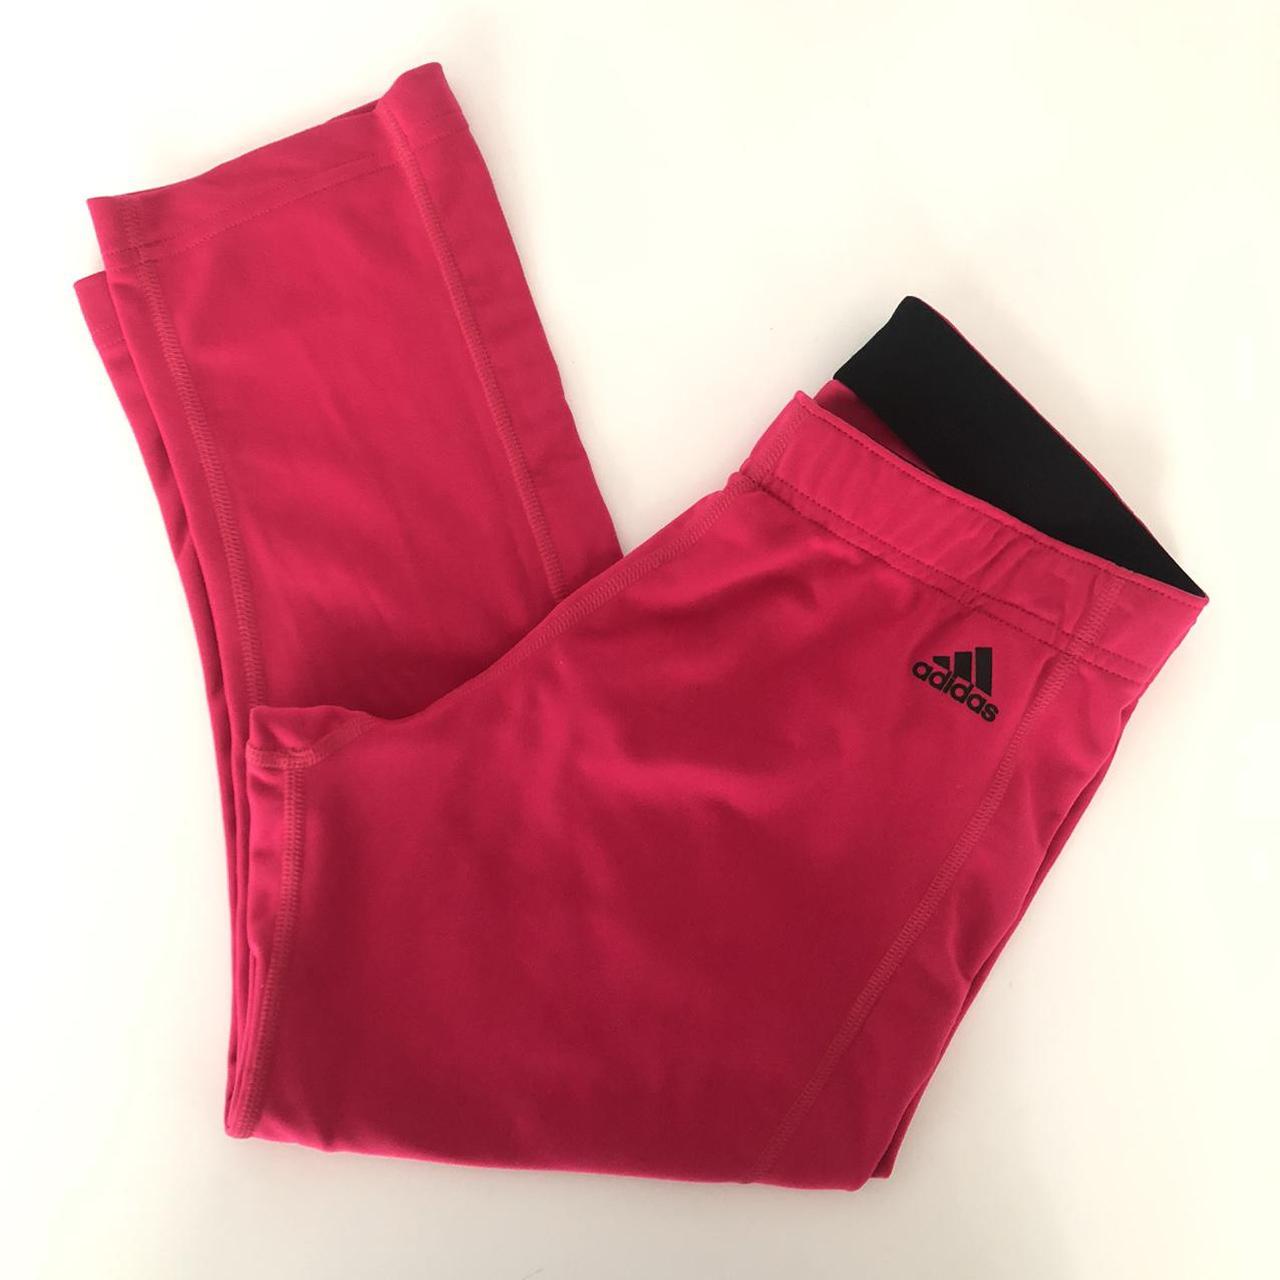 Product Image 1 - Adidas Climalite Hot Pink Workout